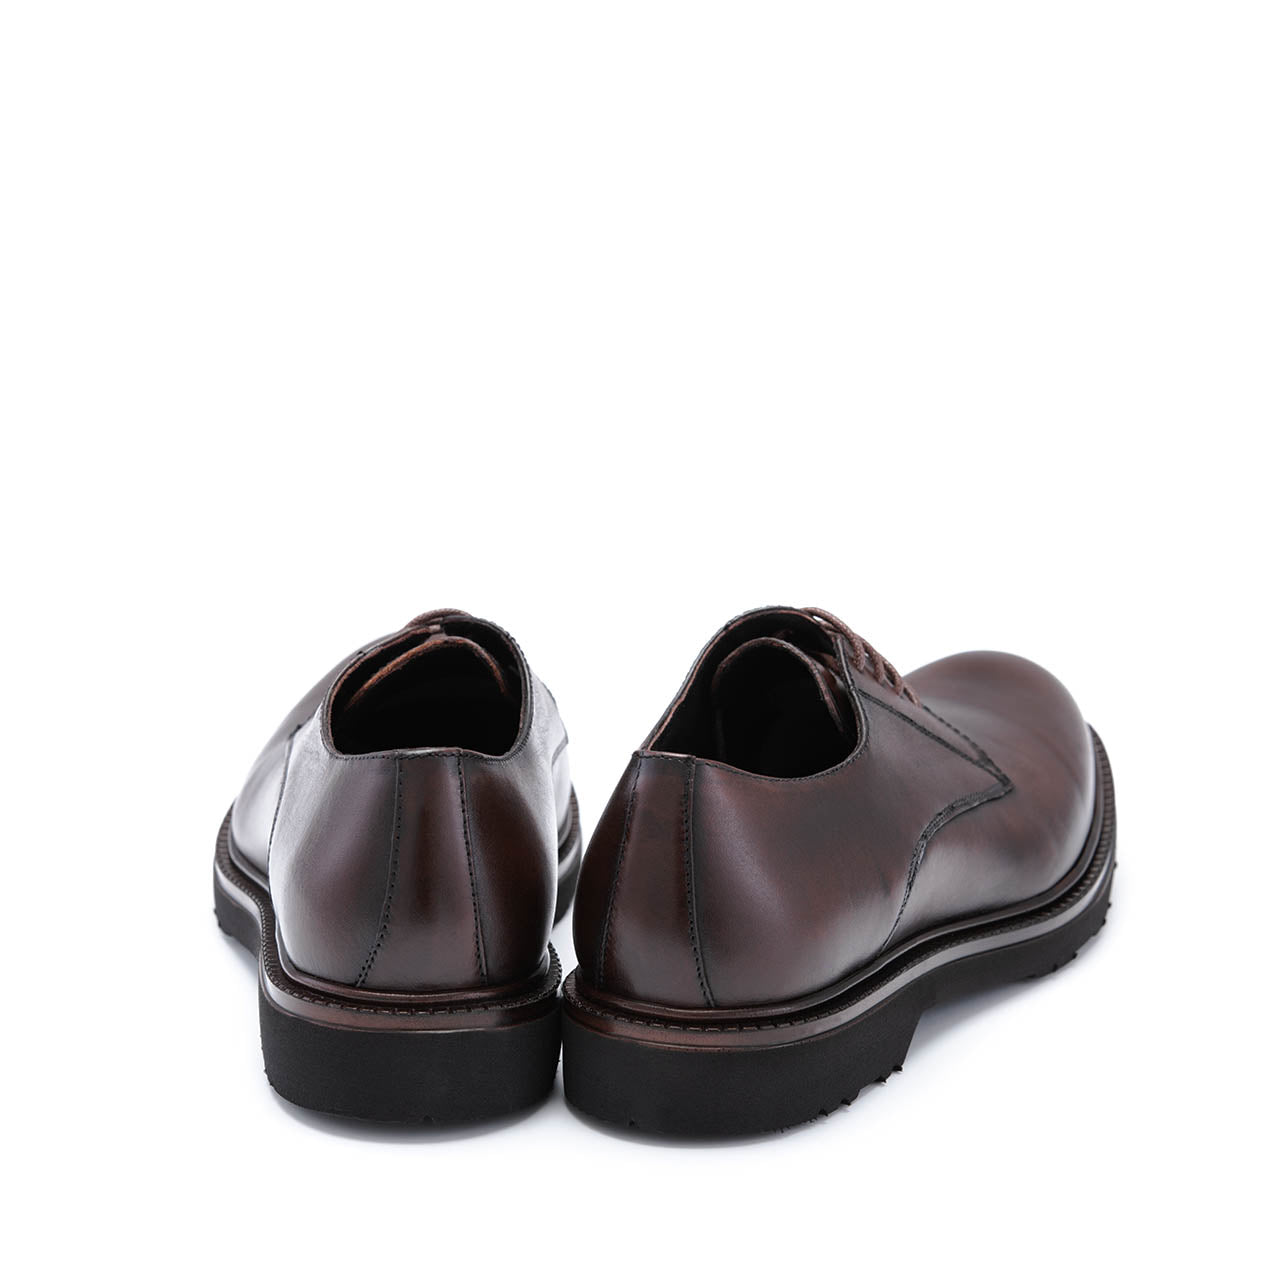 Pantofi eleganti barbati Cillian maro inchis